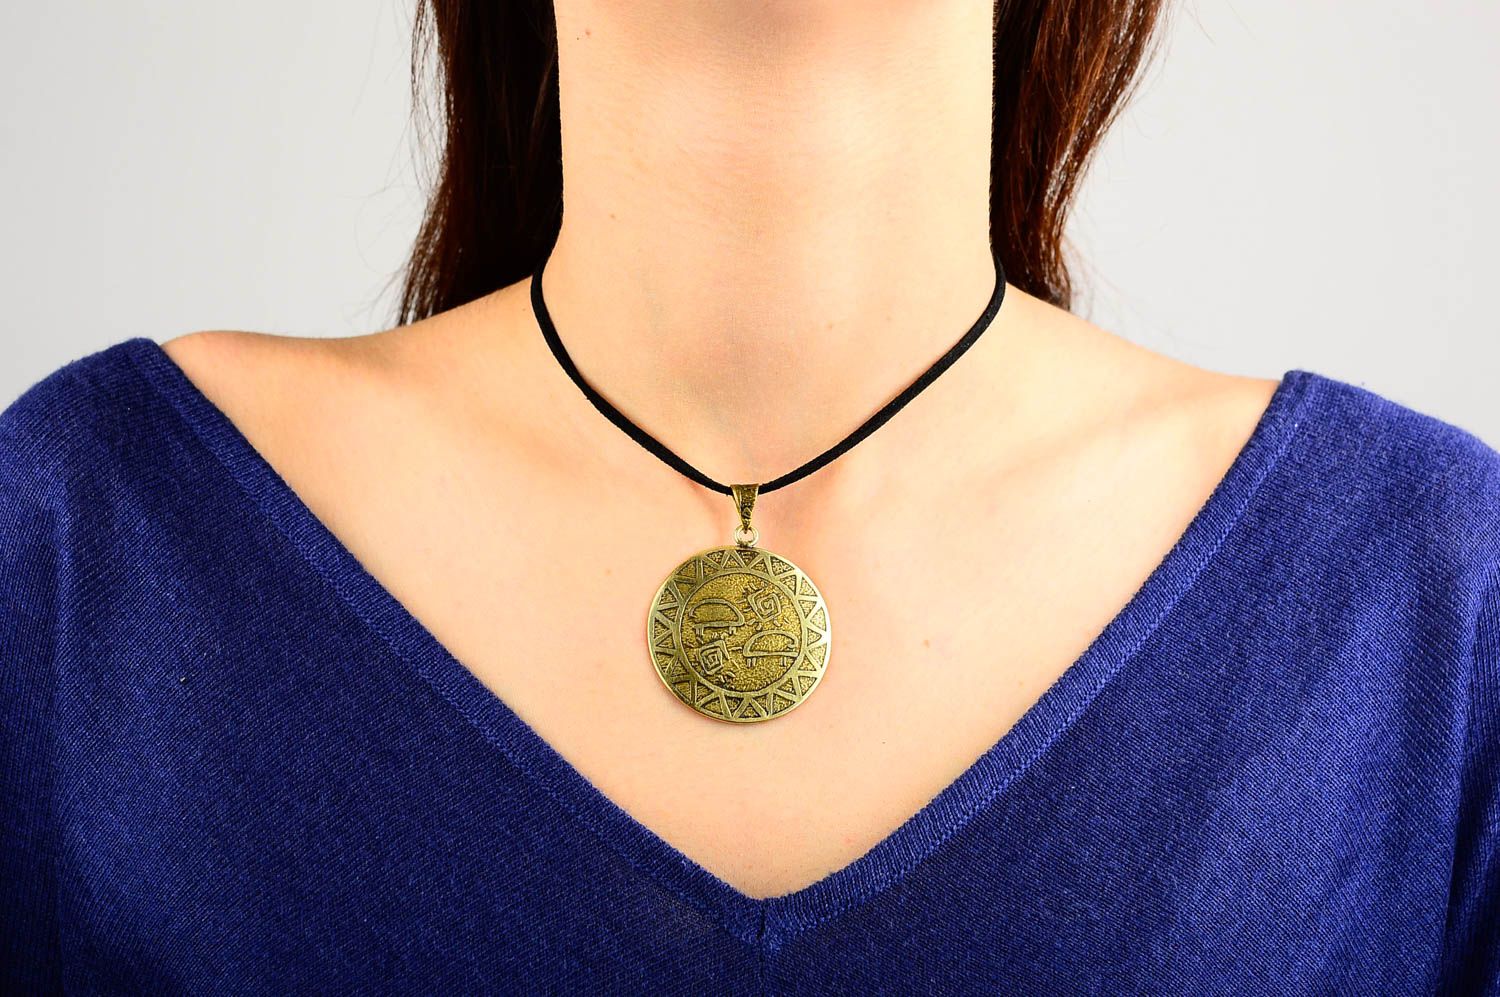 Handmade pendant metal jewelry designer accessory gift ideas unusual pendant photo 2